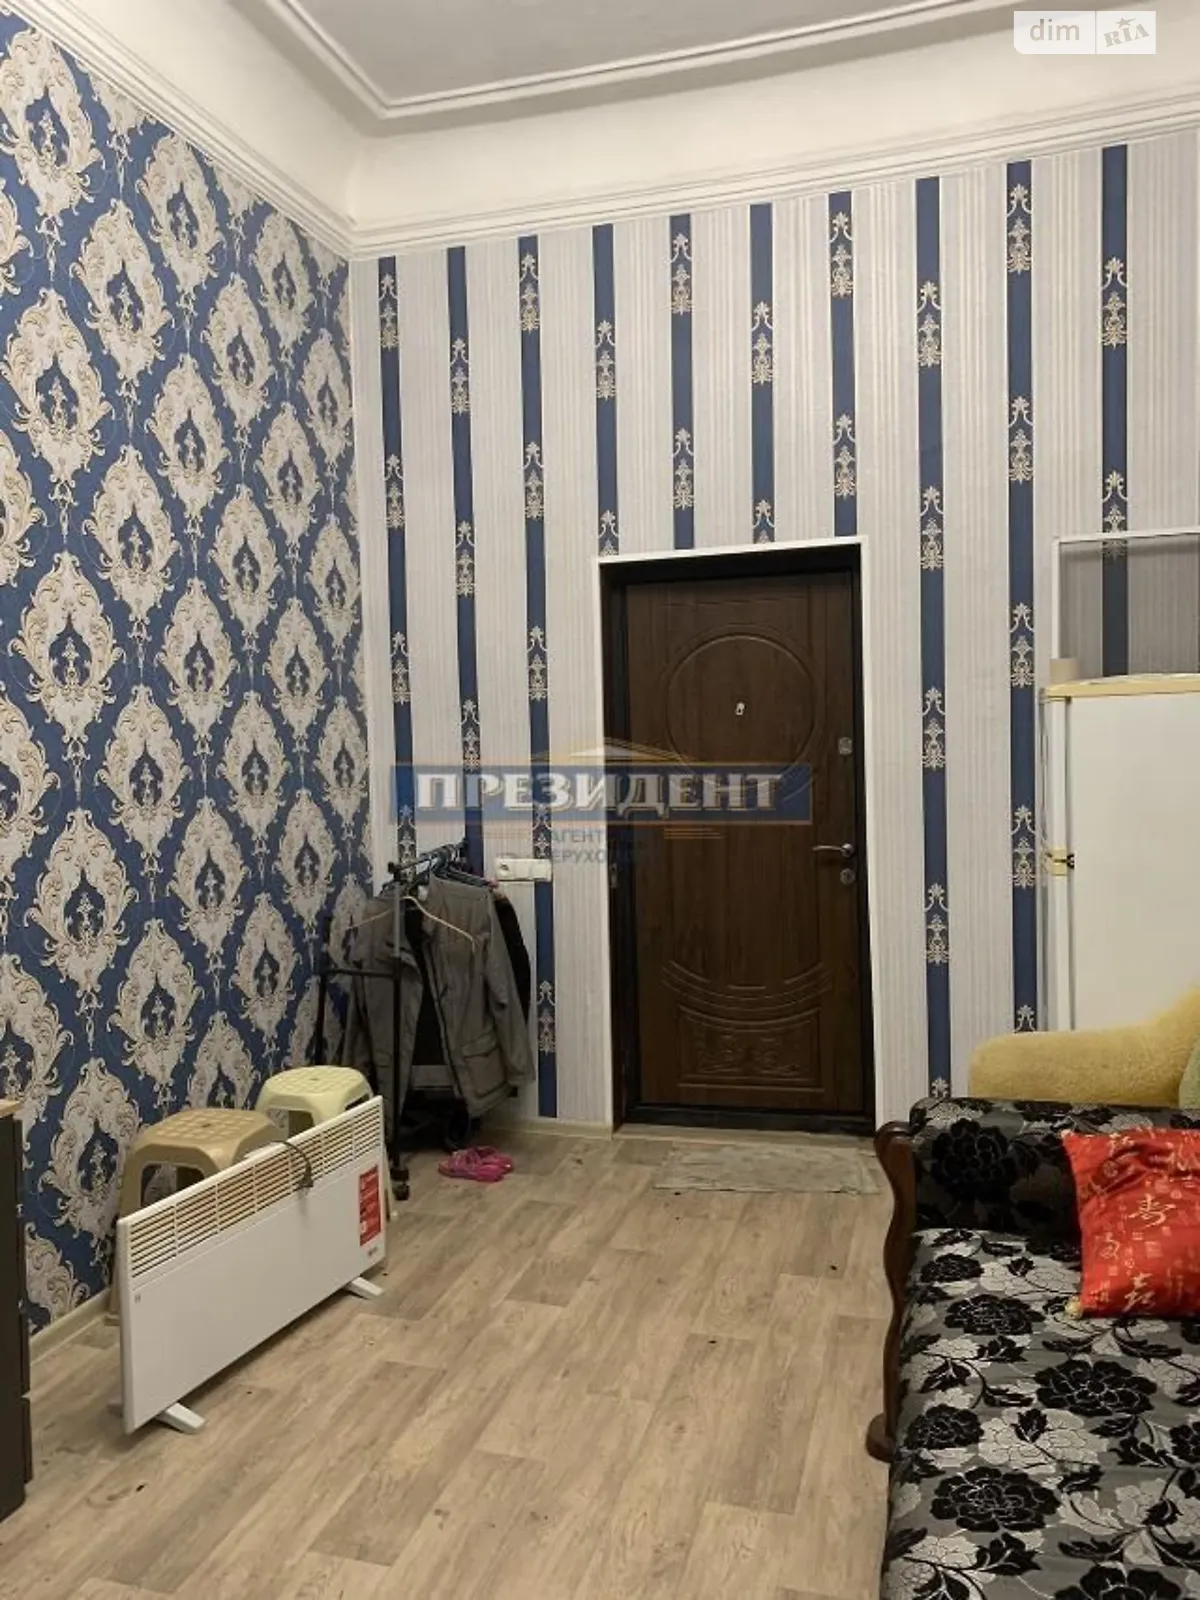 Продается комната 176 кв. м в Одессе, цена: 10000 $ - фото 1